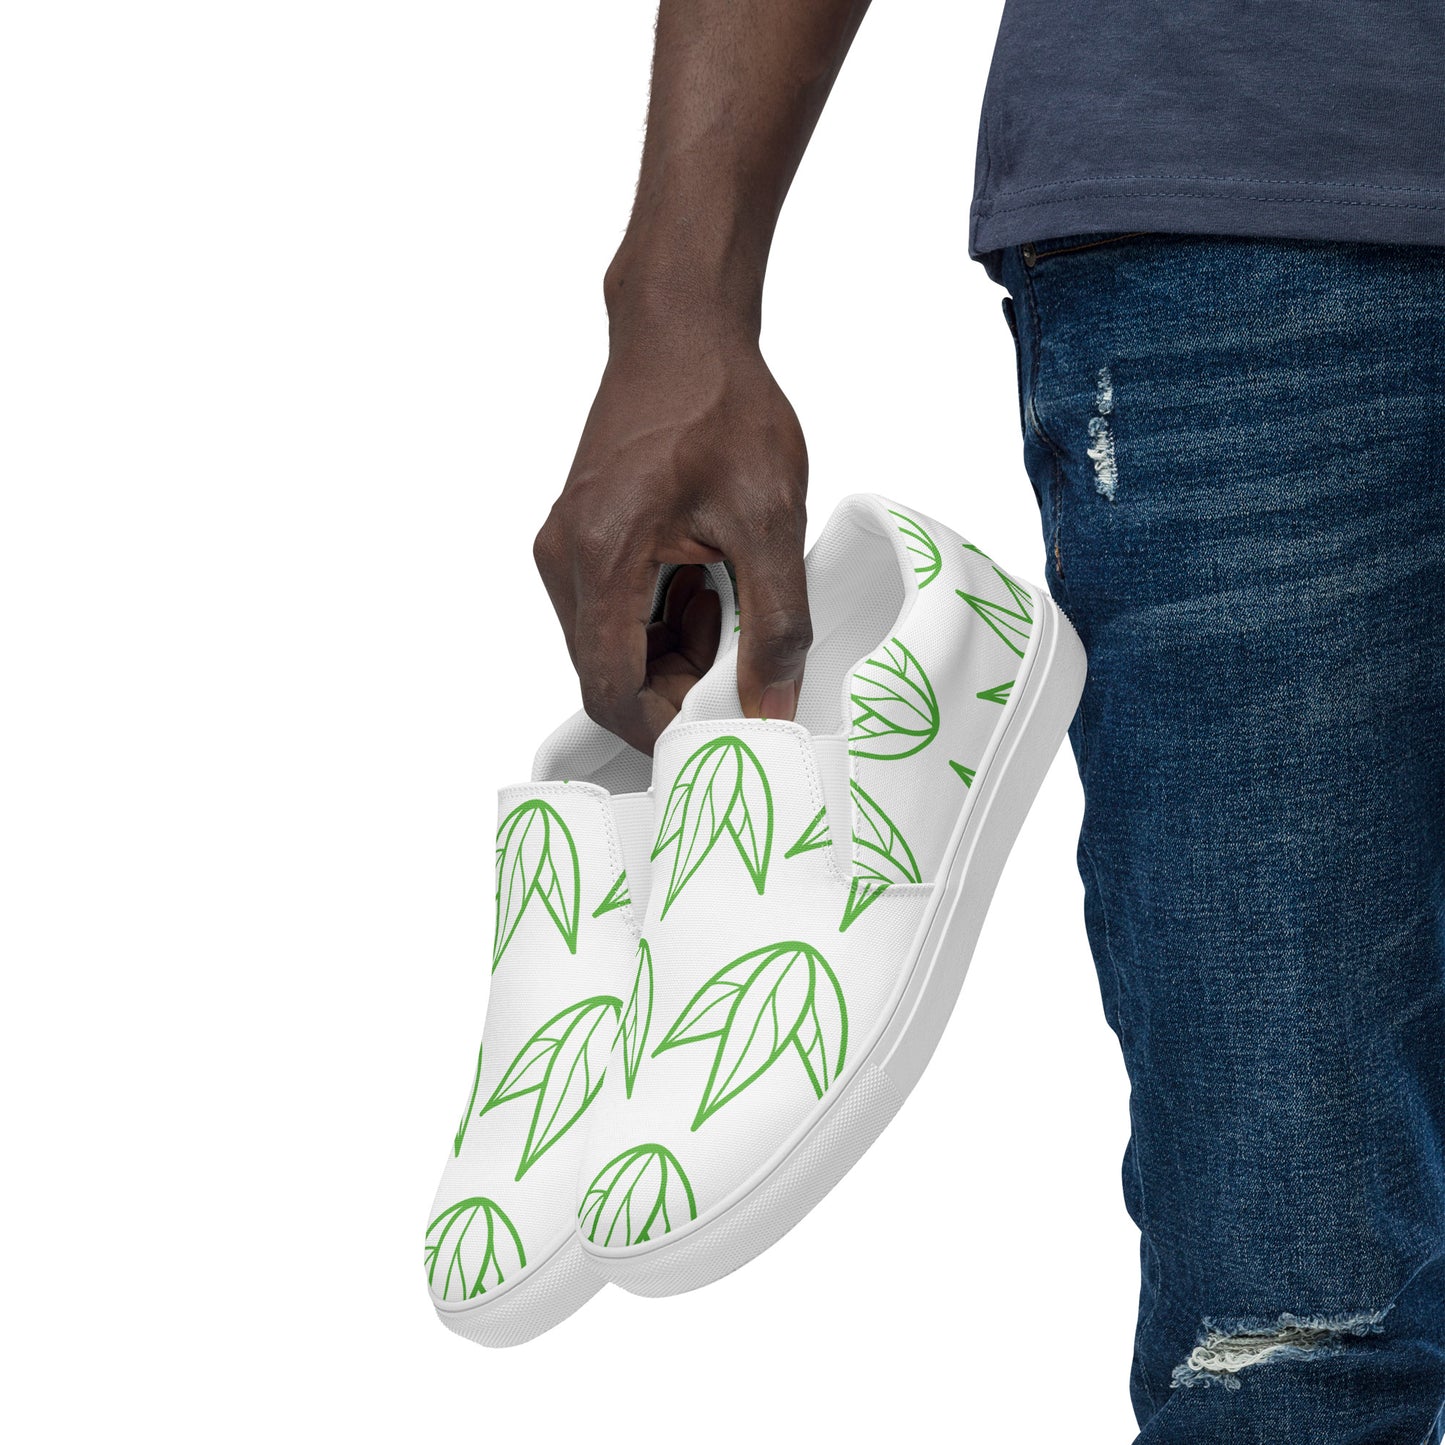 Vibrant Visions - Organic Health & Wellness Men’s slip-on canvas shoes